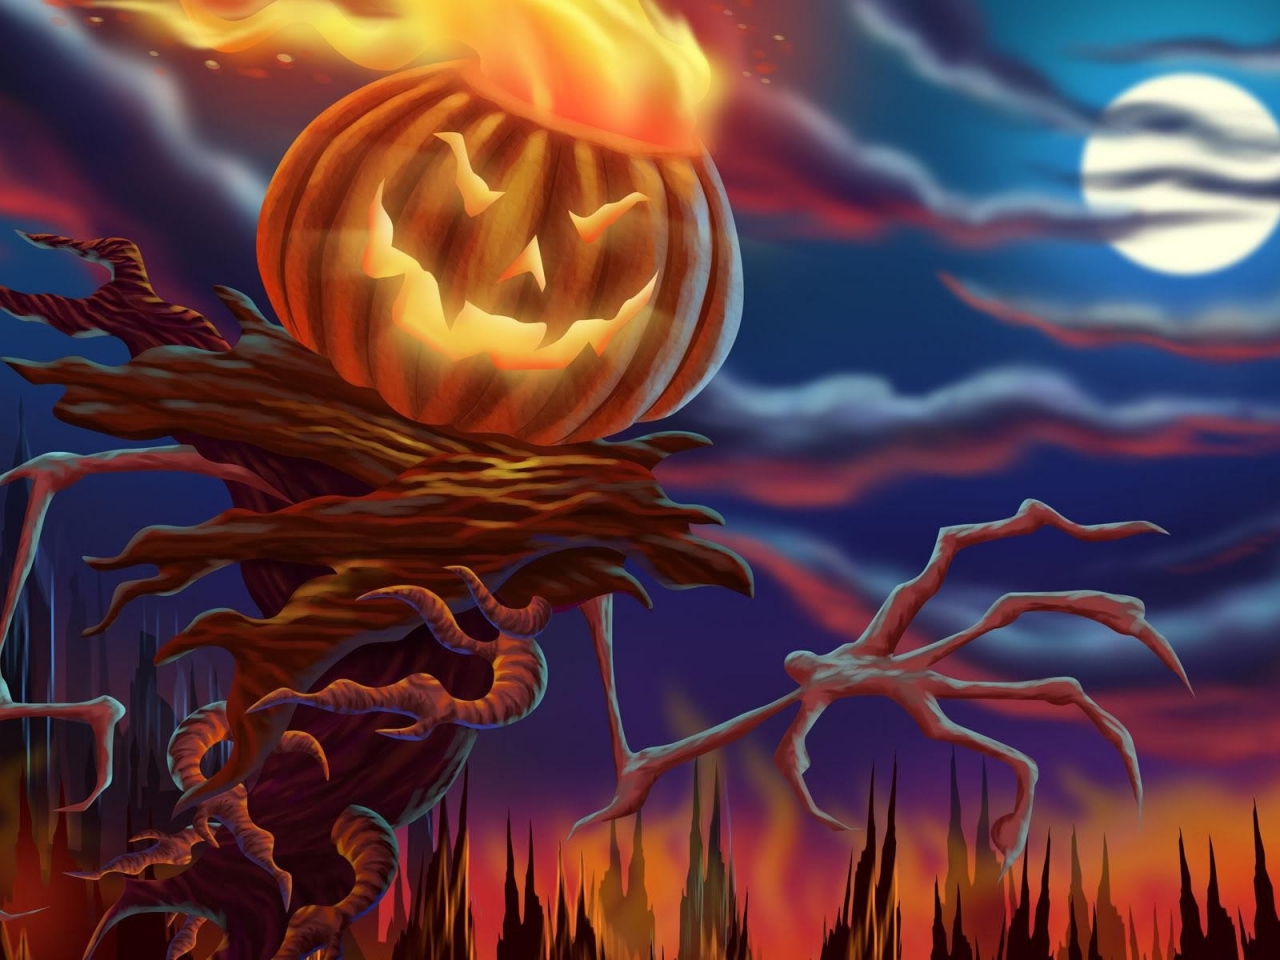 Halloween Digital Illustration for 1280 x 960 resolution